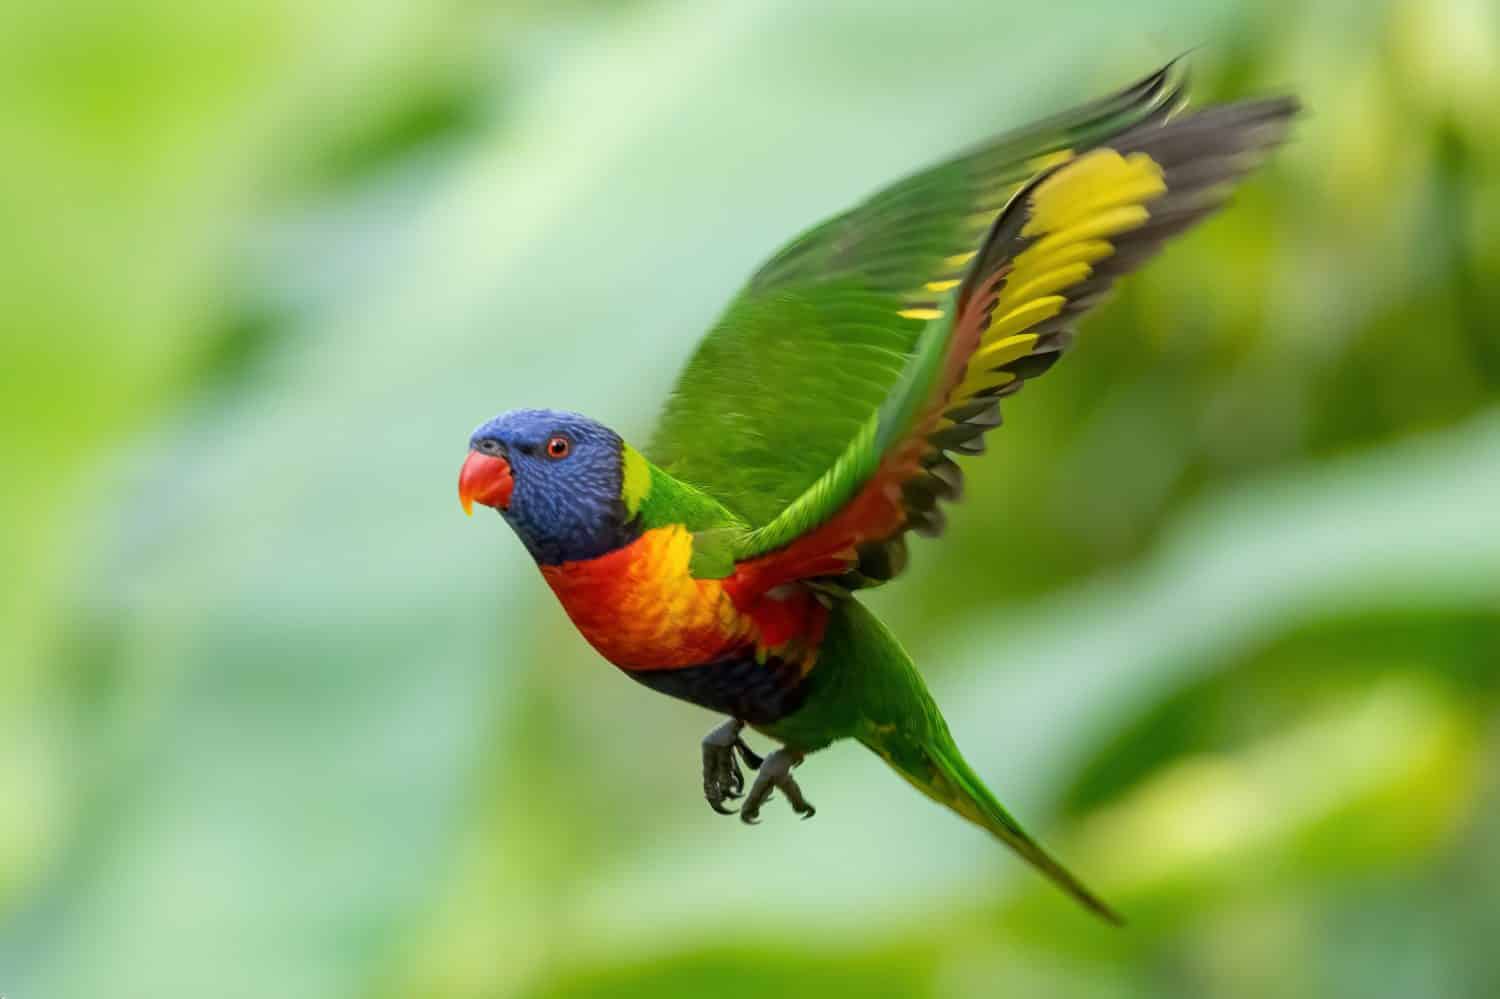 Parrot in Flight - Rainbow Lorikeet Flying Through the Air